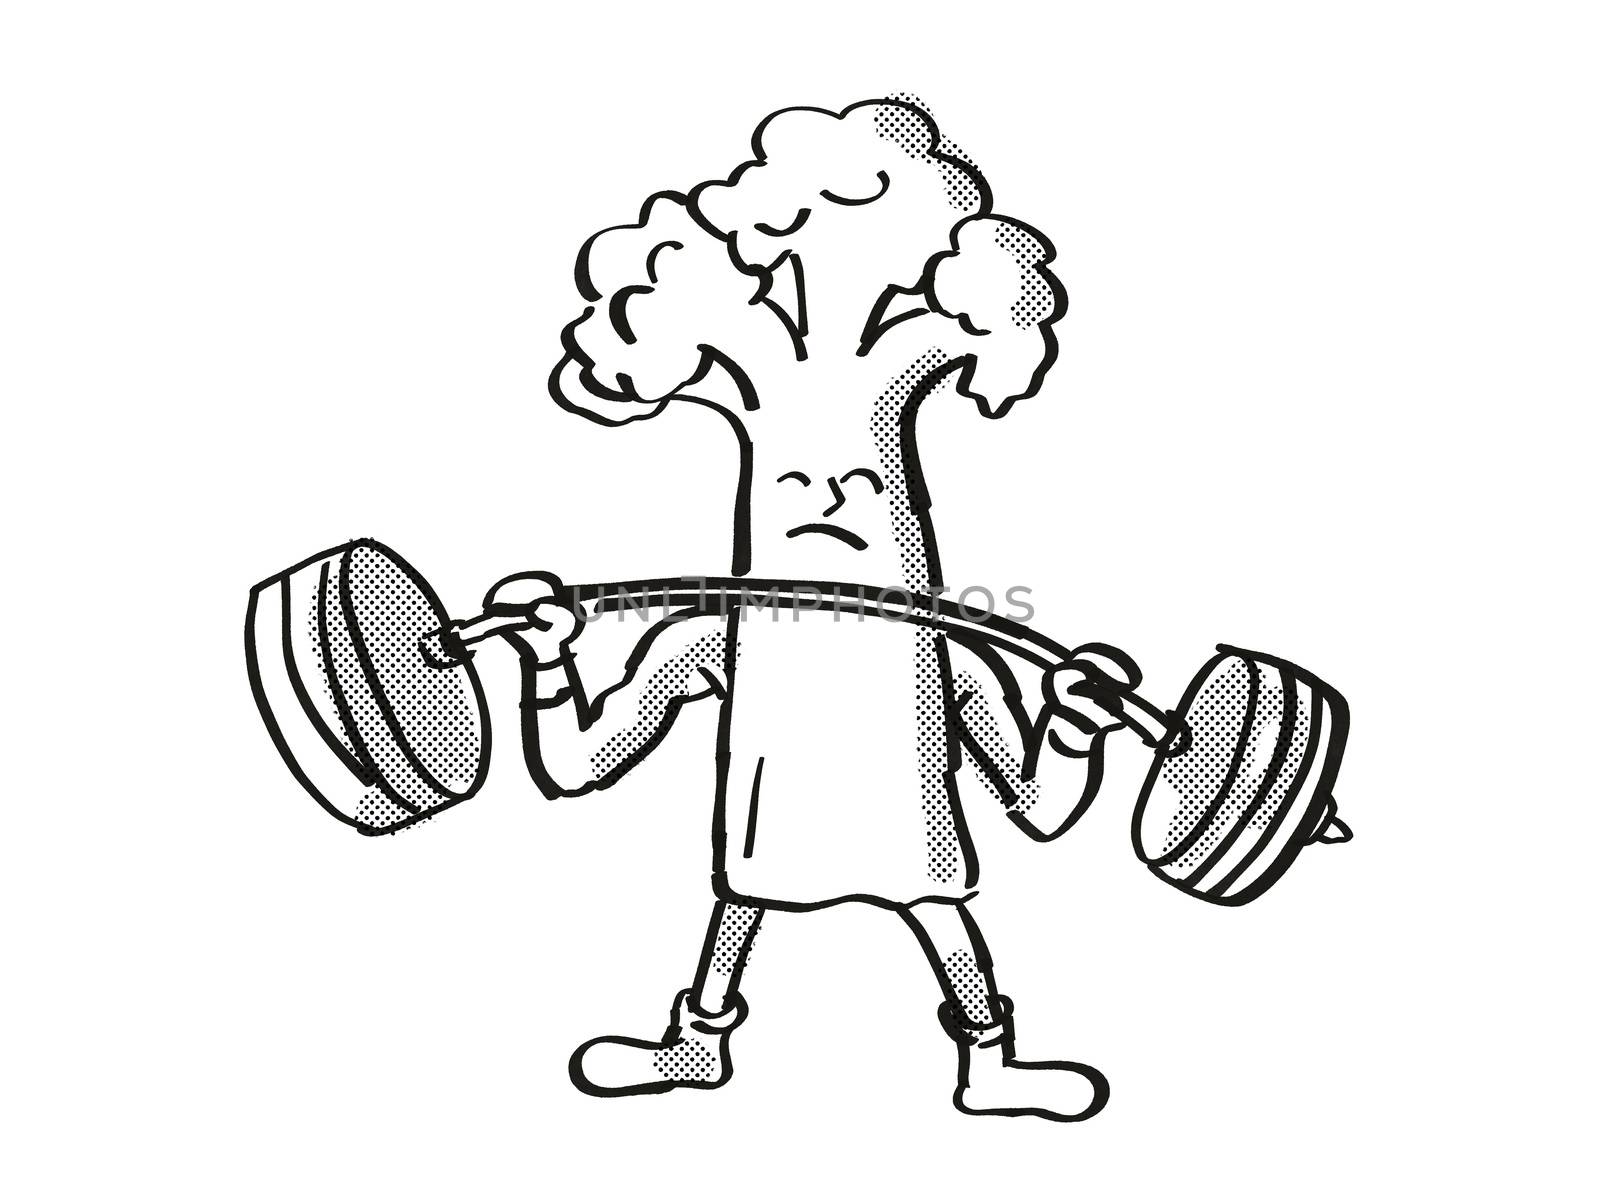 Cauliflower Healthy Vegetable Lifting Barbell Cartoon Retro Drawing by patrimonio